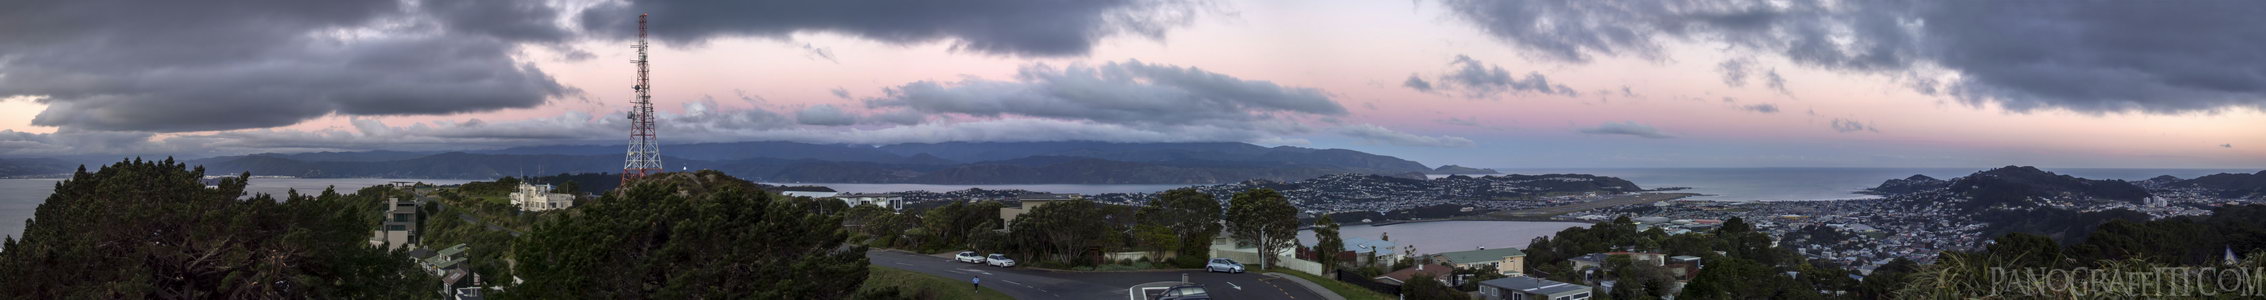 Trepid sky above Mount Victoria - Mount Victoria, Wellington, New Zealand